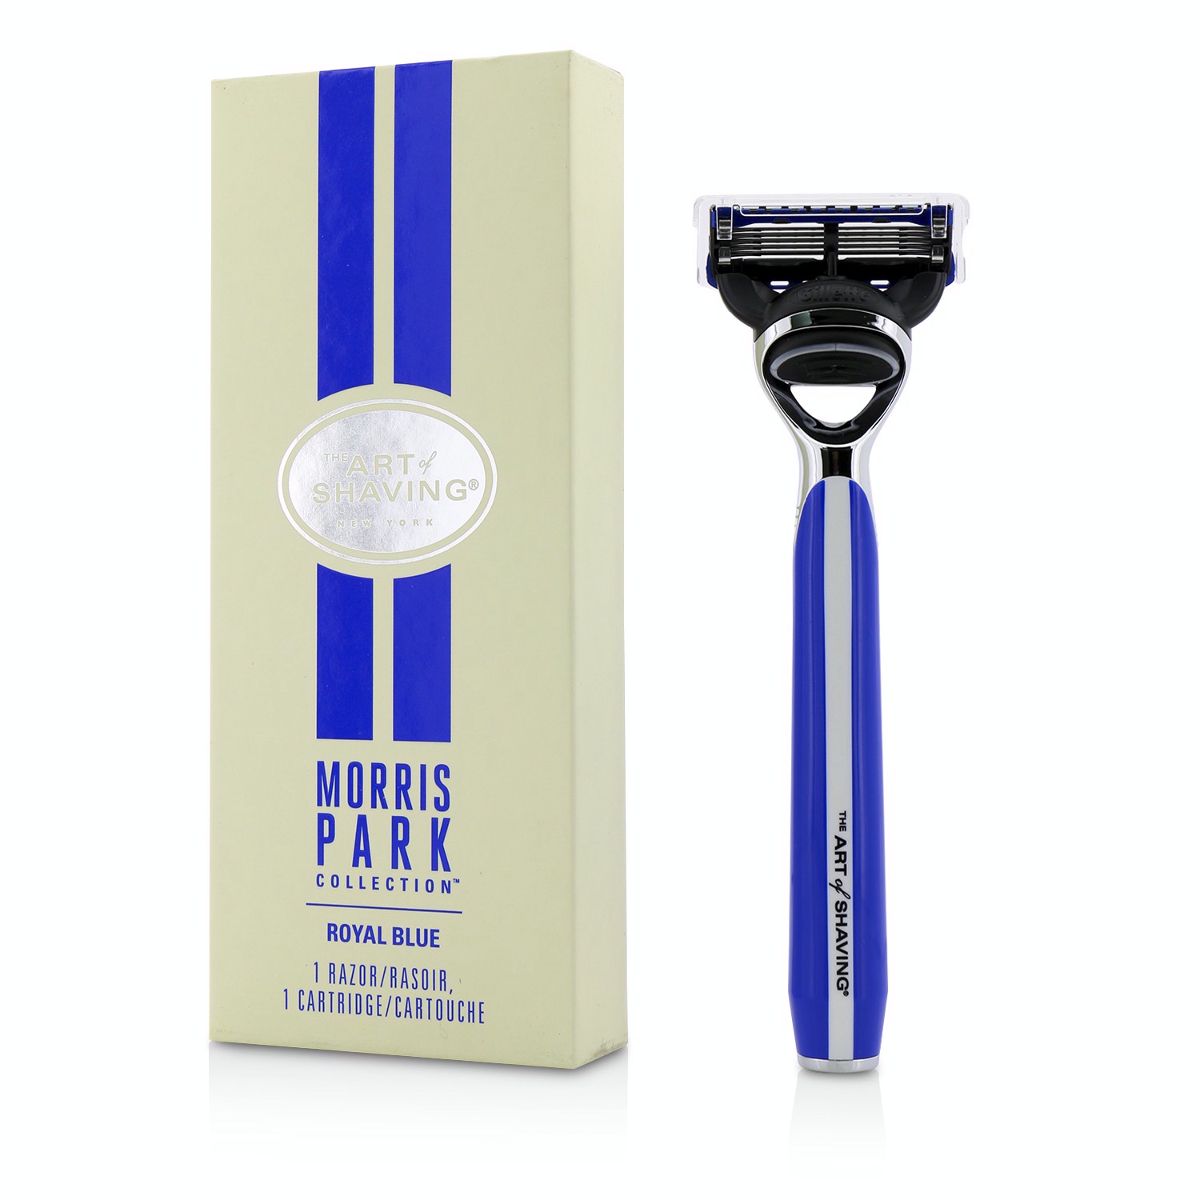 Morris Park Collection Razor - Royal Blue The Art Of Shaving Image